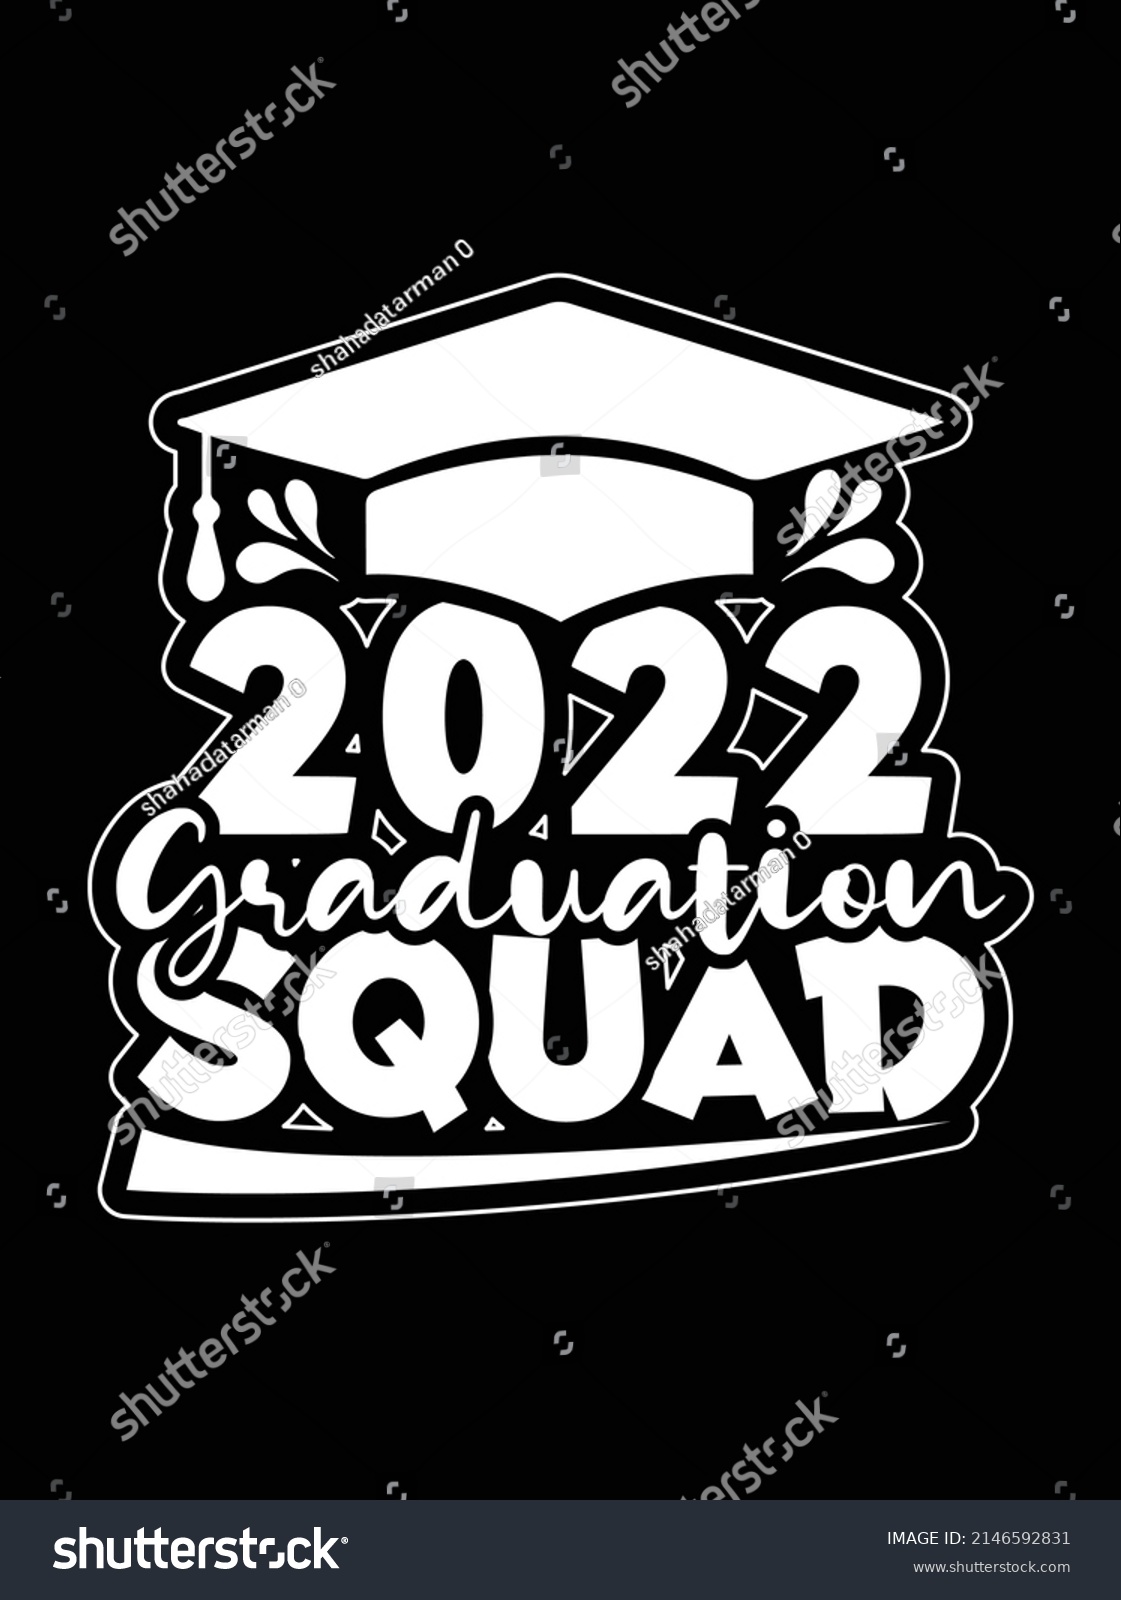 SVG of 2022 graduation squad ,Graduation t-shirt design. svg